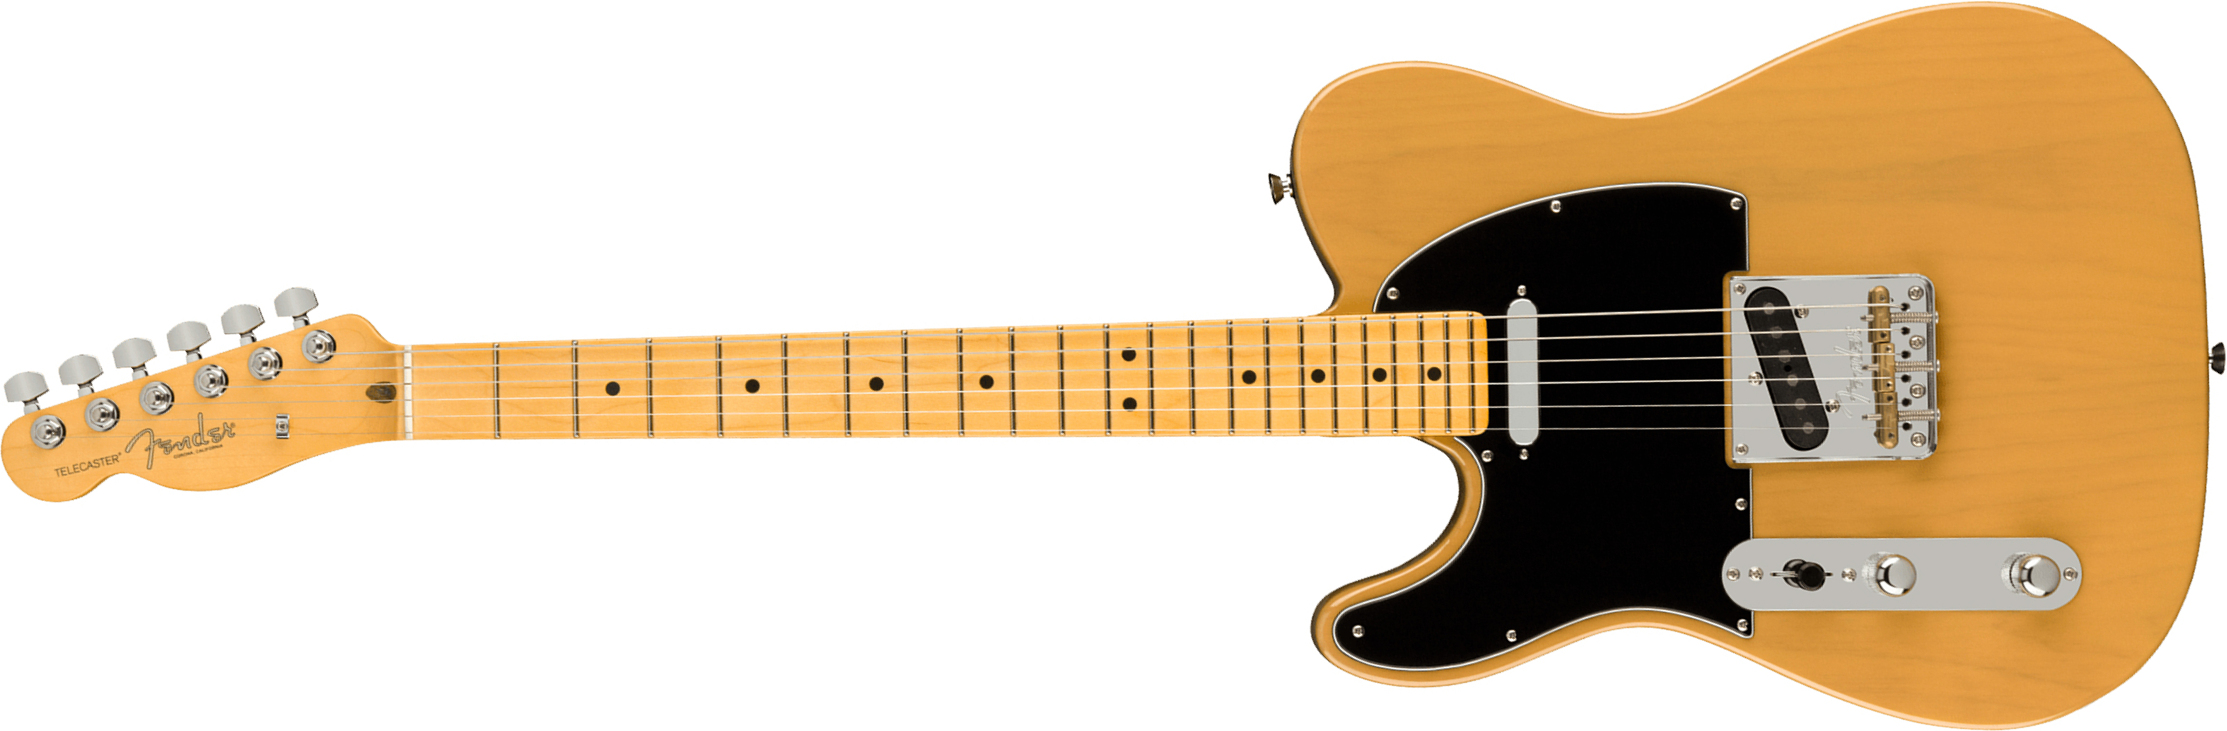 Fender Tele American Professional Ii Lh Gaucher Usa Mn - Butterscotch Blonde - Linkshandige elektrische gitaar - Main picture